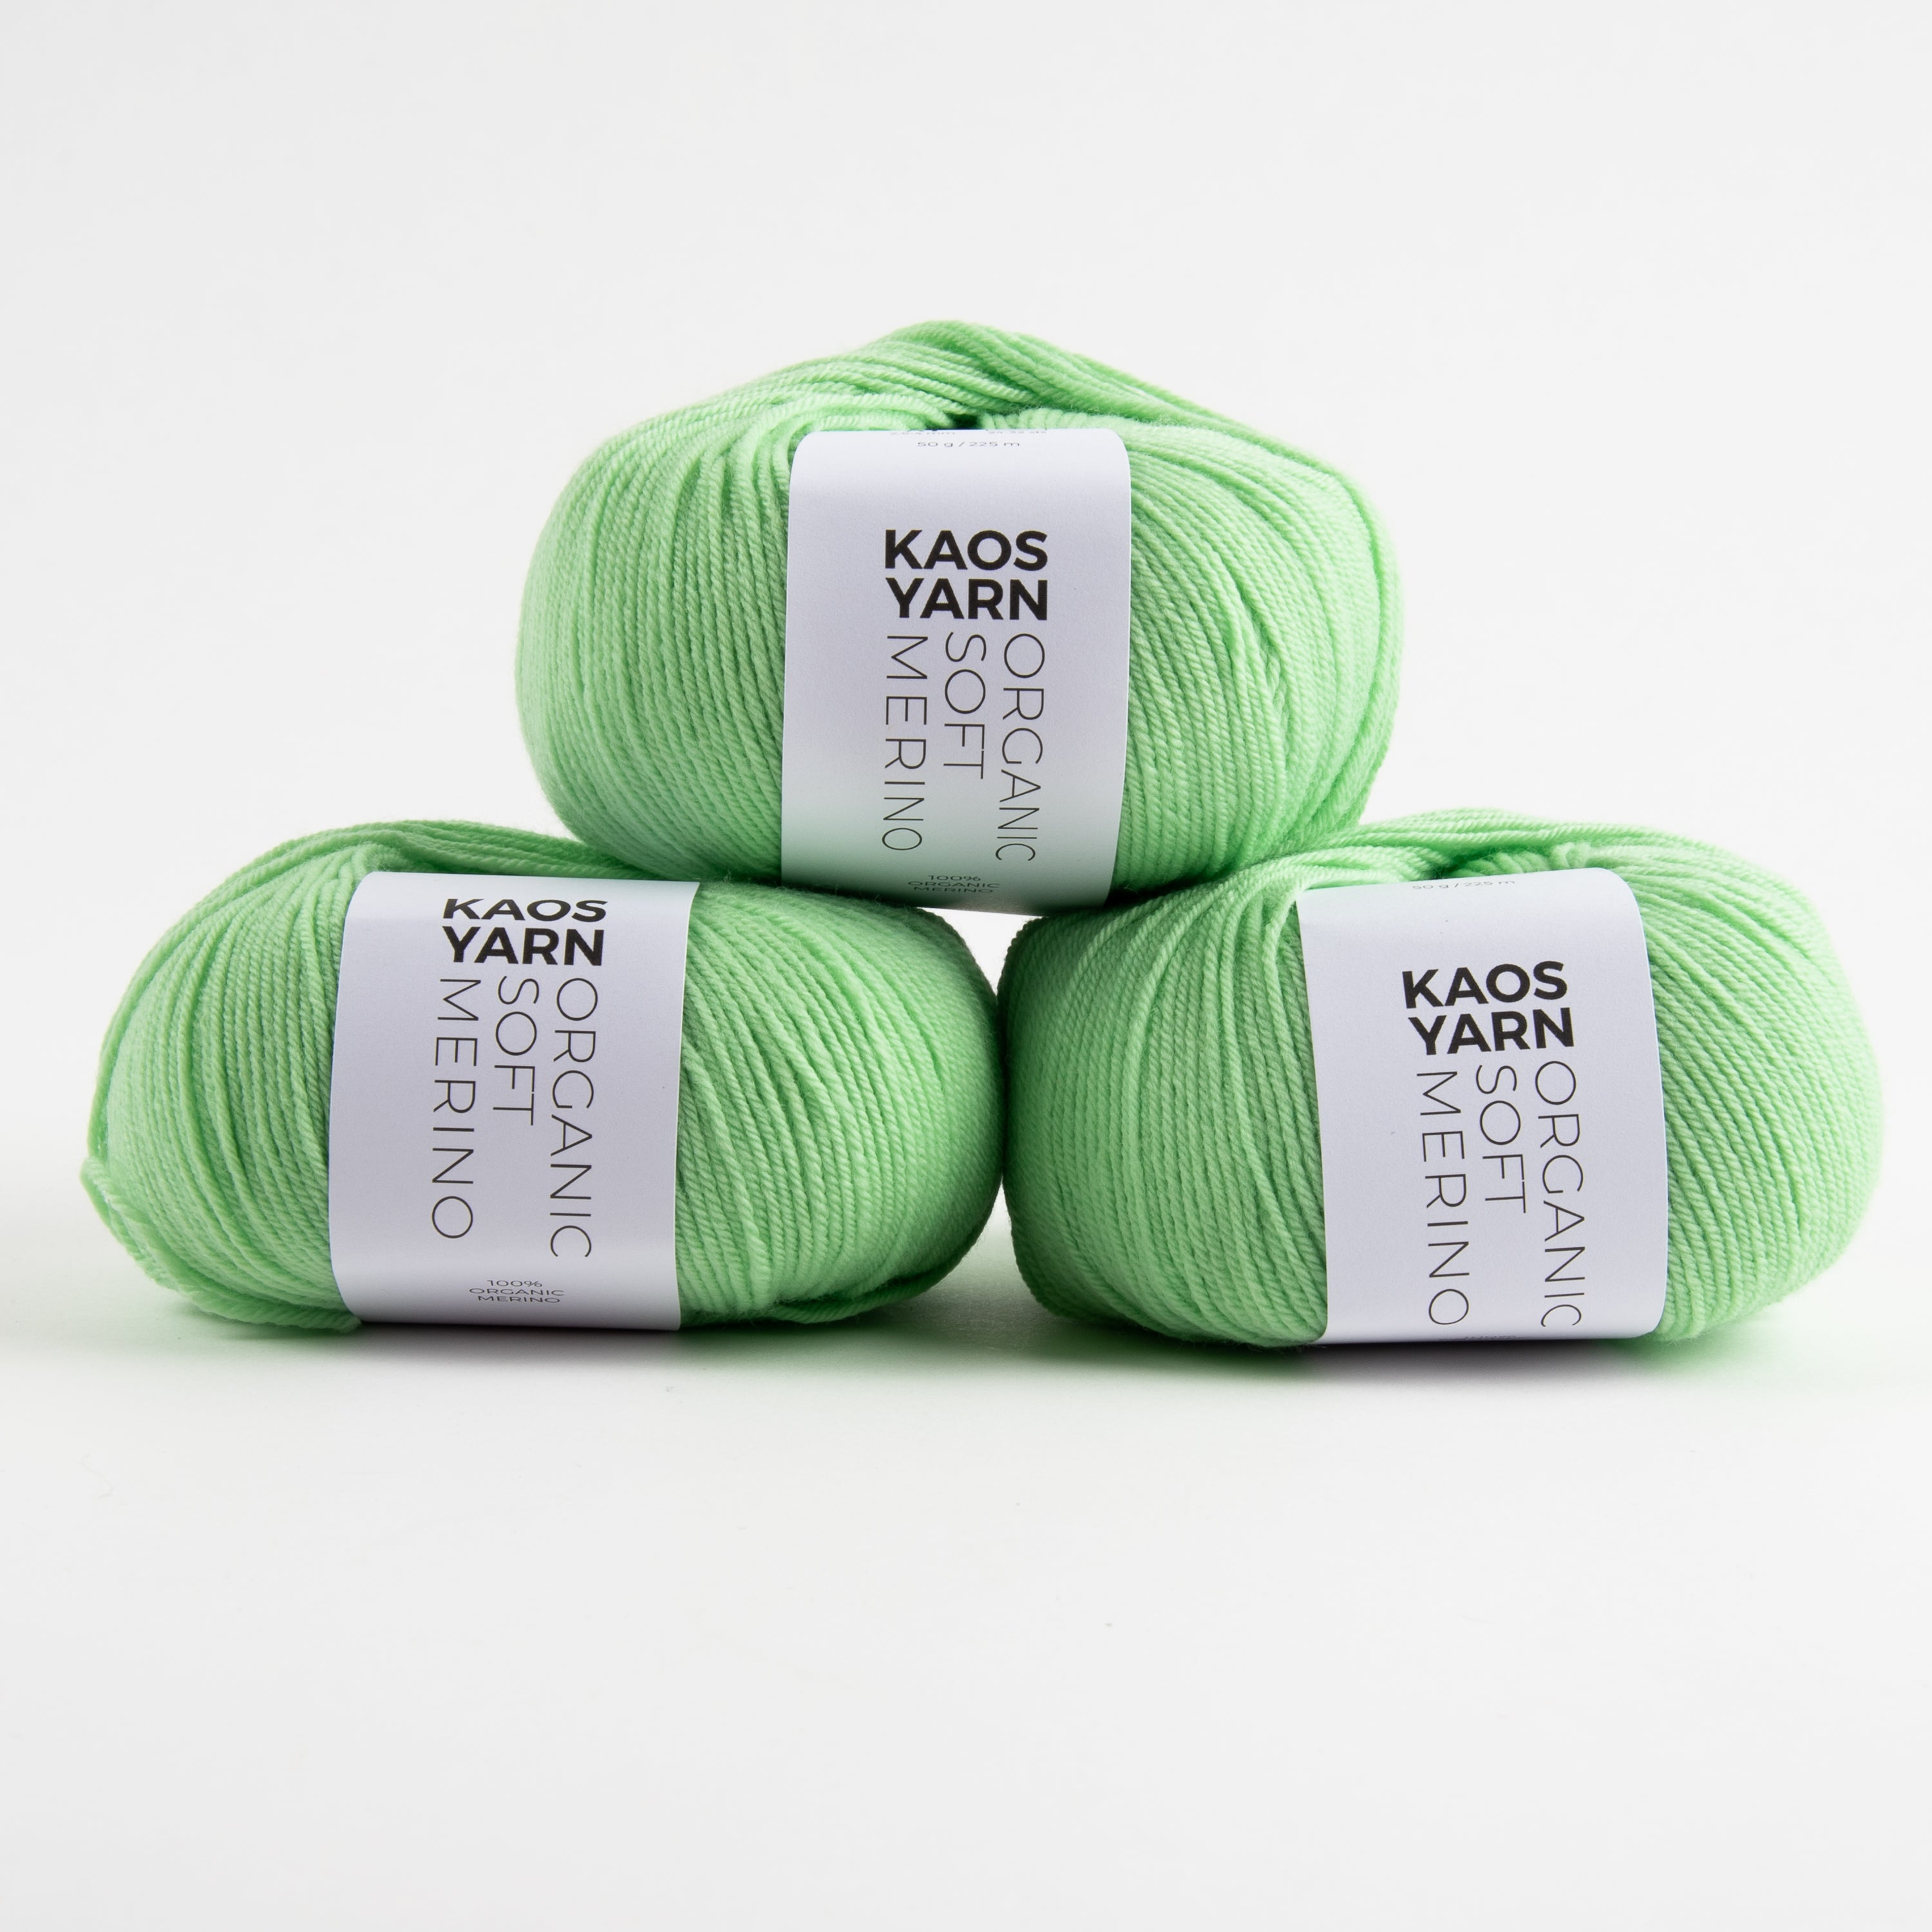 Vivacious 4ply, Hand-Knitting Merino Yarn